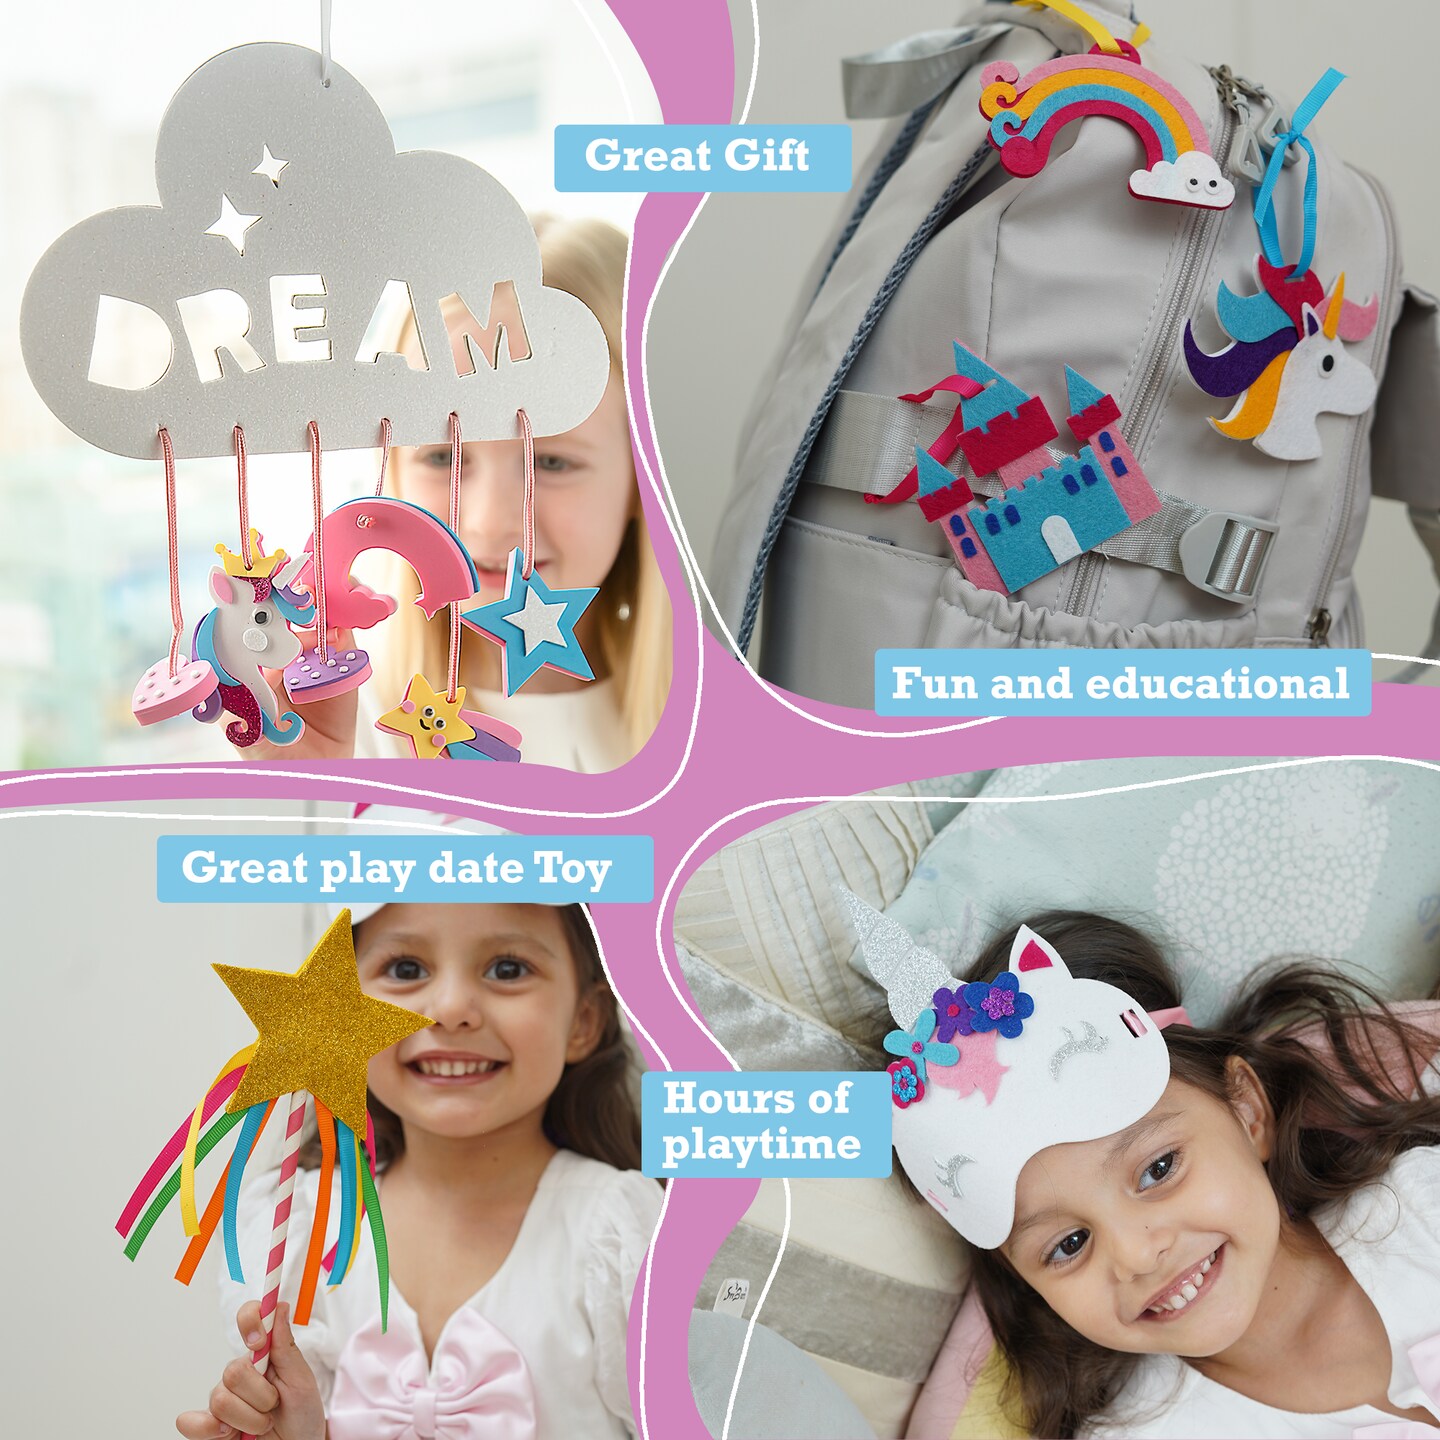 Unicorn Dream Catcher Yarn Craft Kit by Creatology™